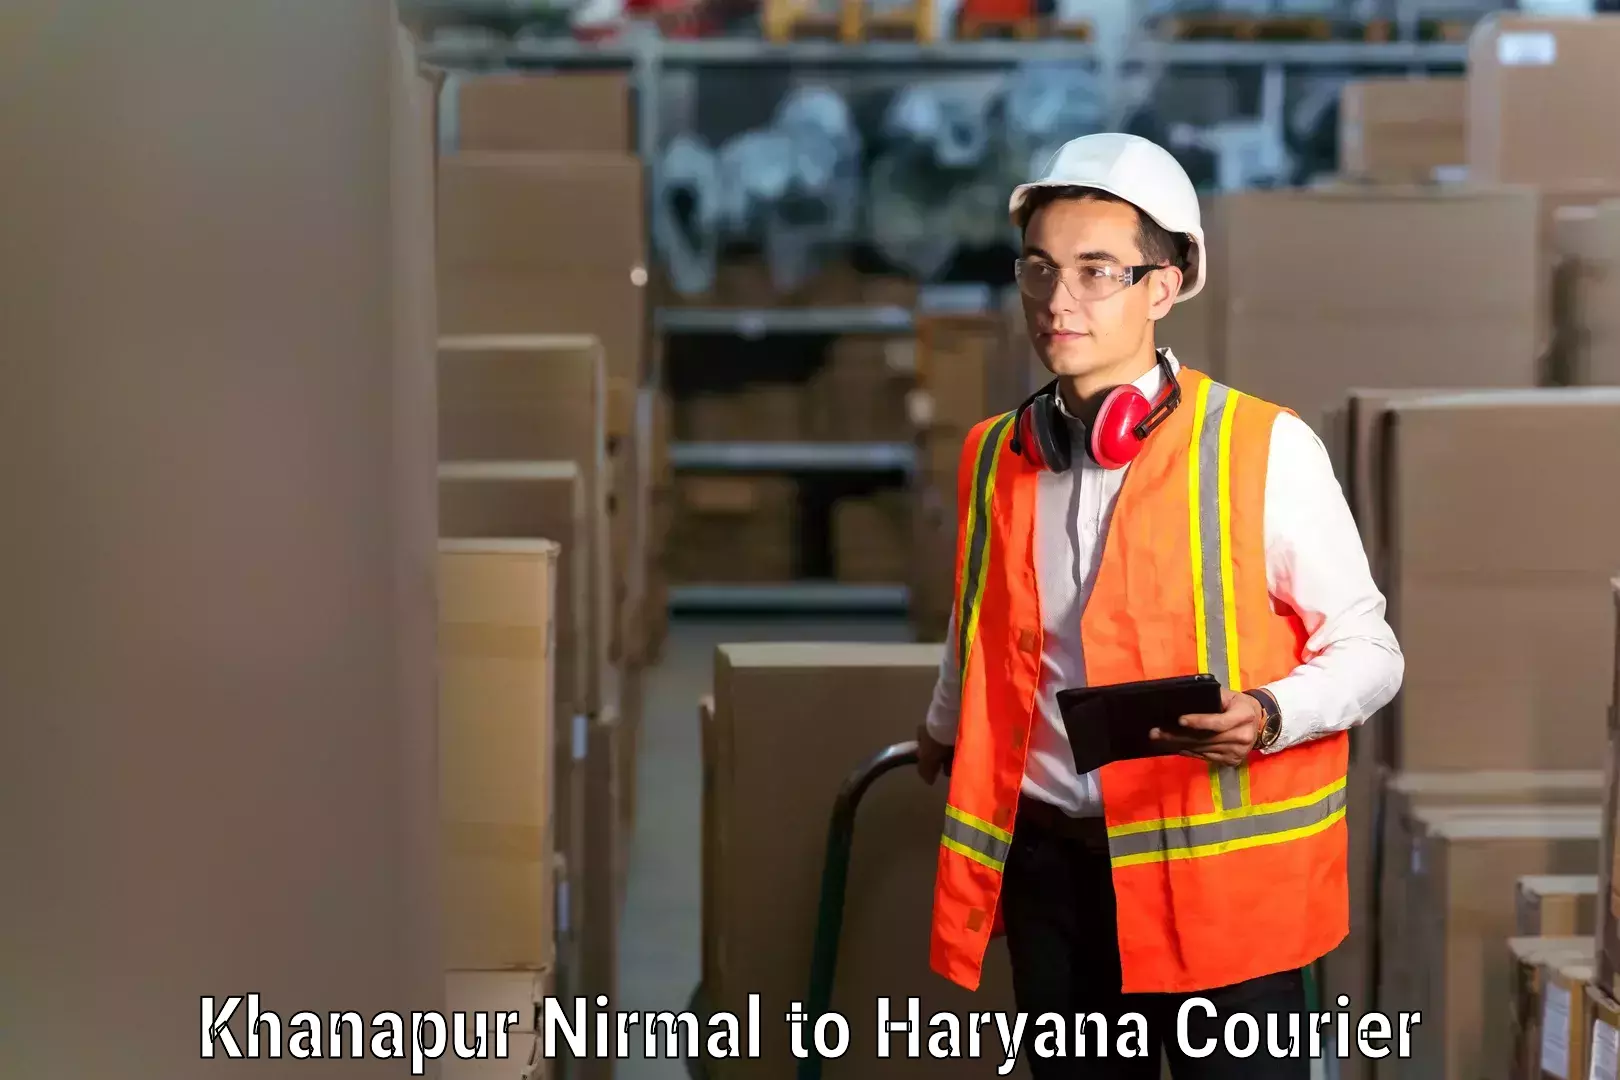 Specialized moving company Khanapur Nirmal to Odhan